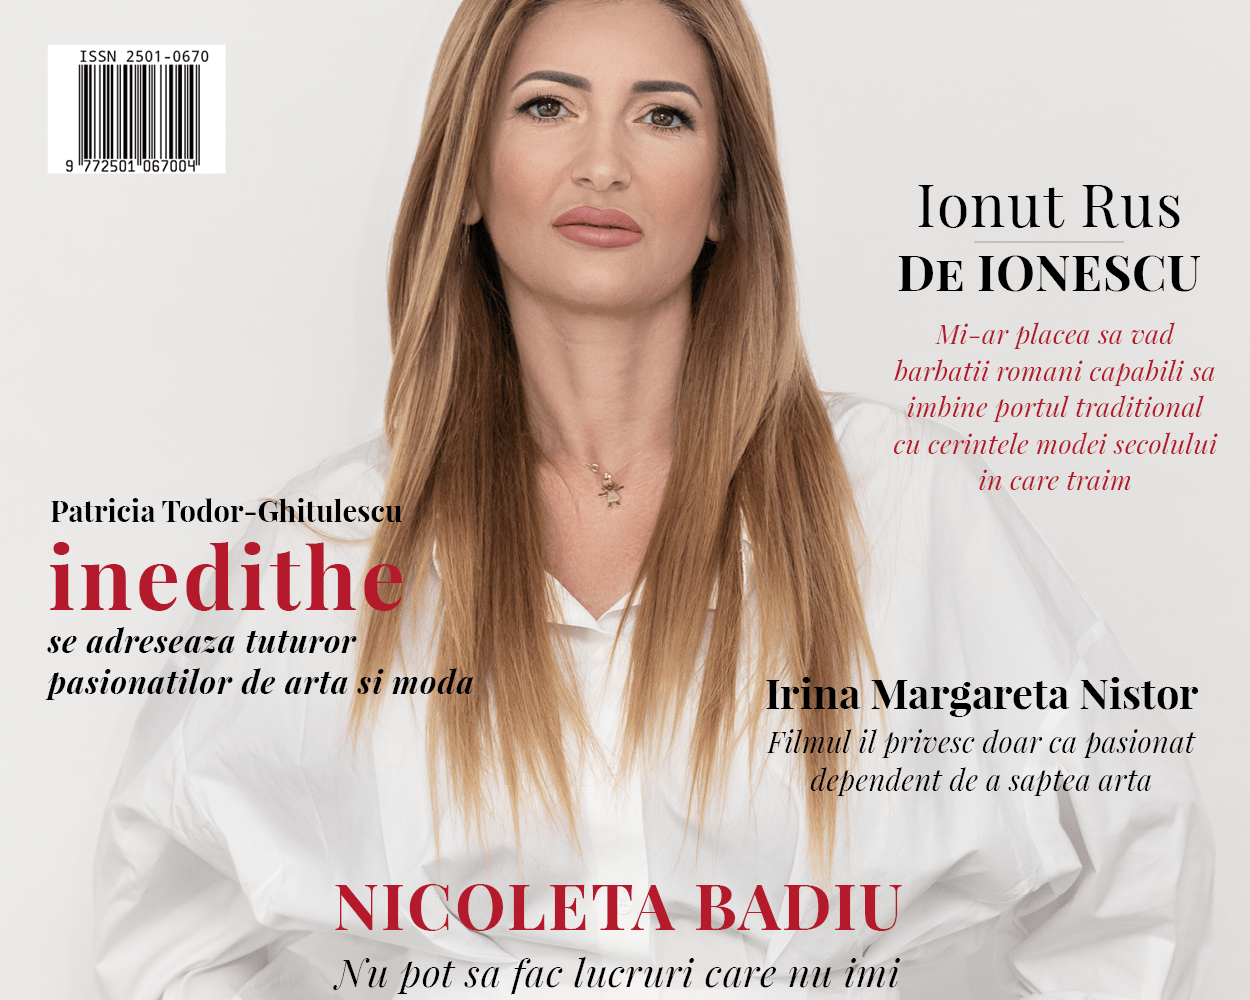 Ionuț Rus - Interviu Revista FAMOST (Februarie 2020)